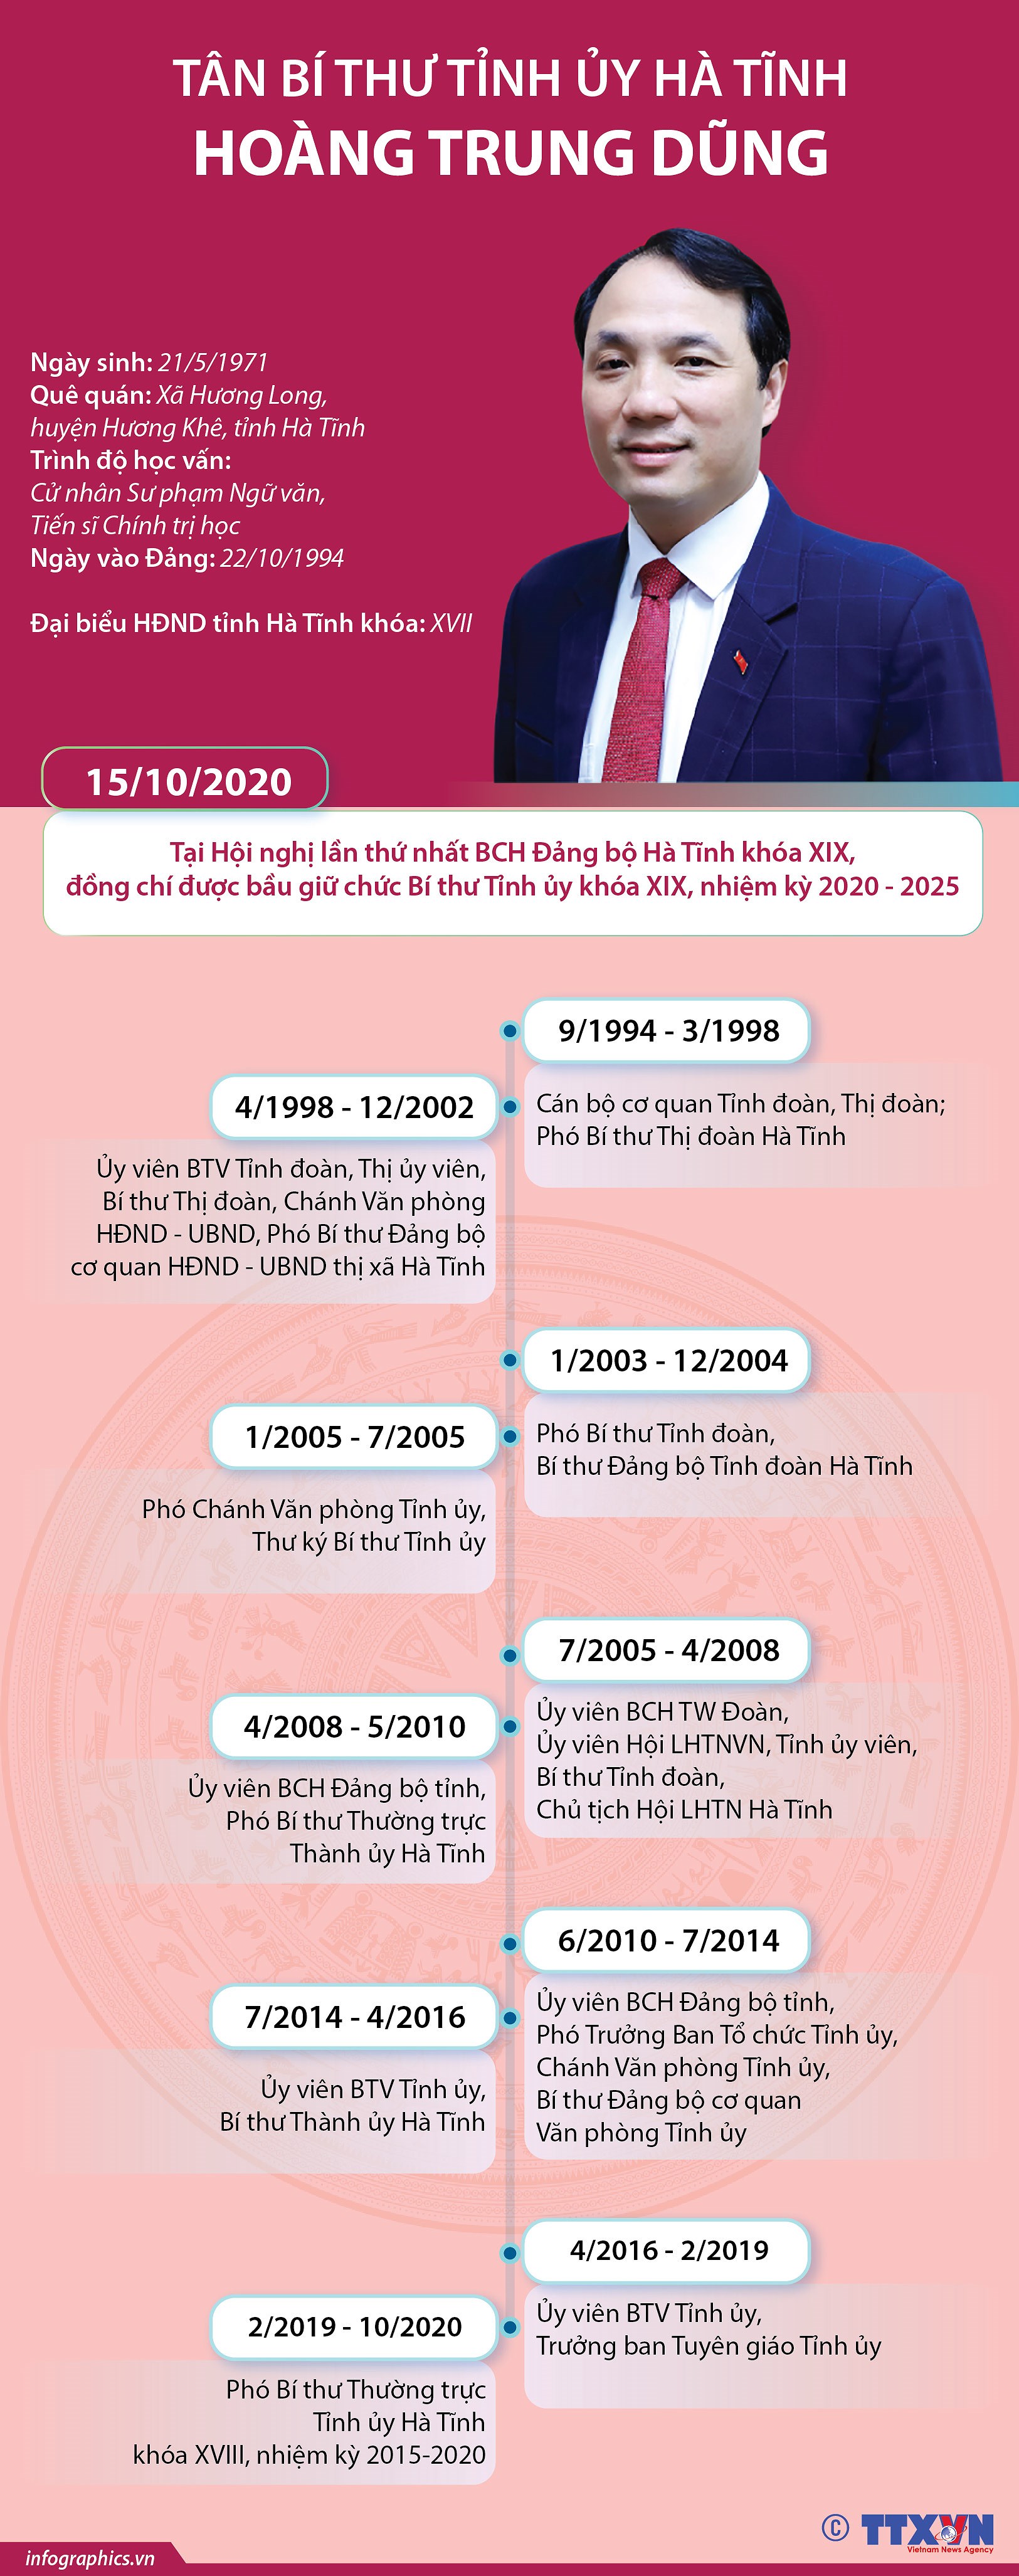 [Infographics] Tan Bi thu Tinh uy Ha Tinh Hoang Trung Dung hinh anh 1